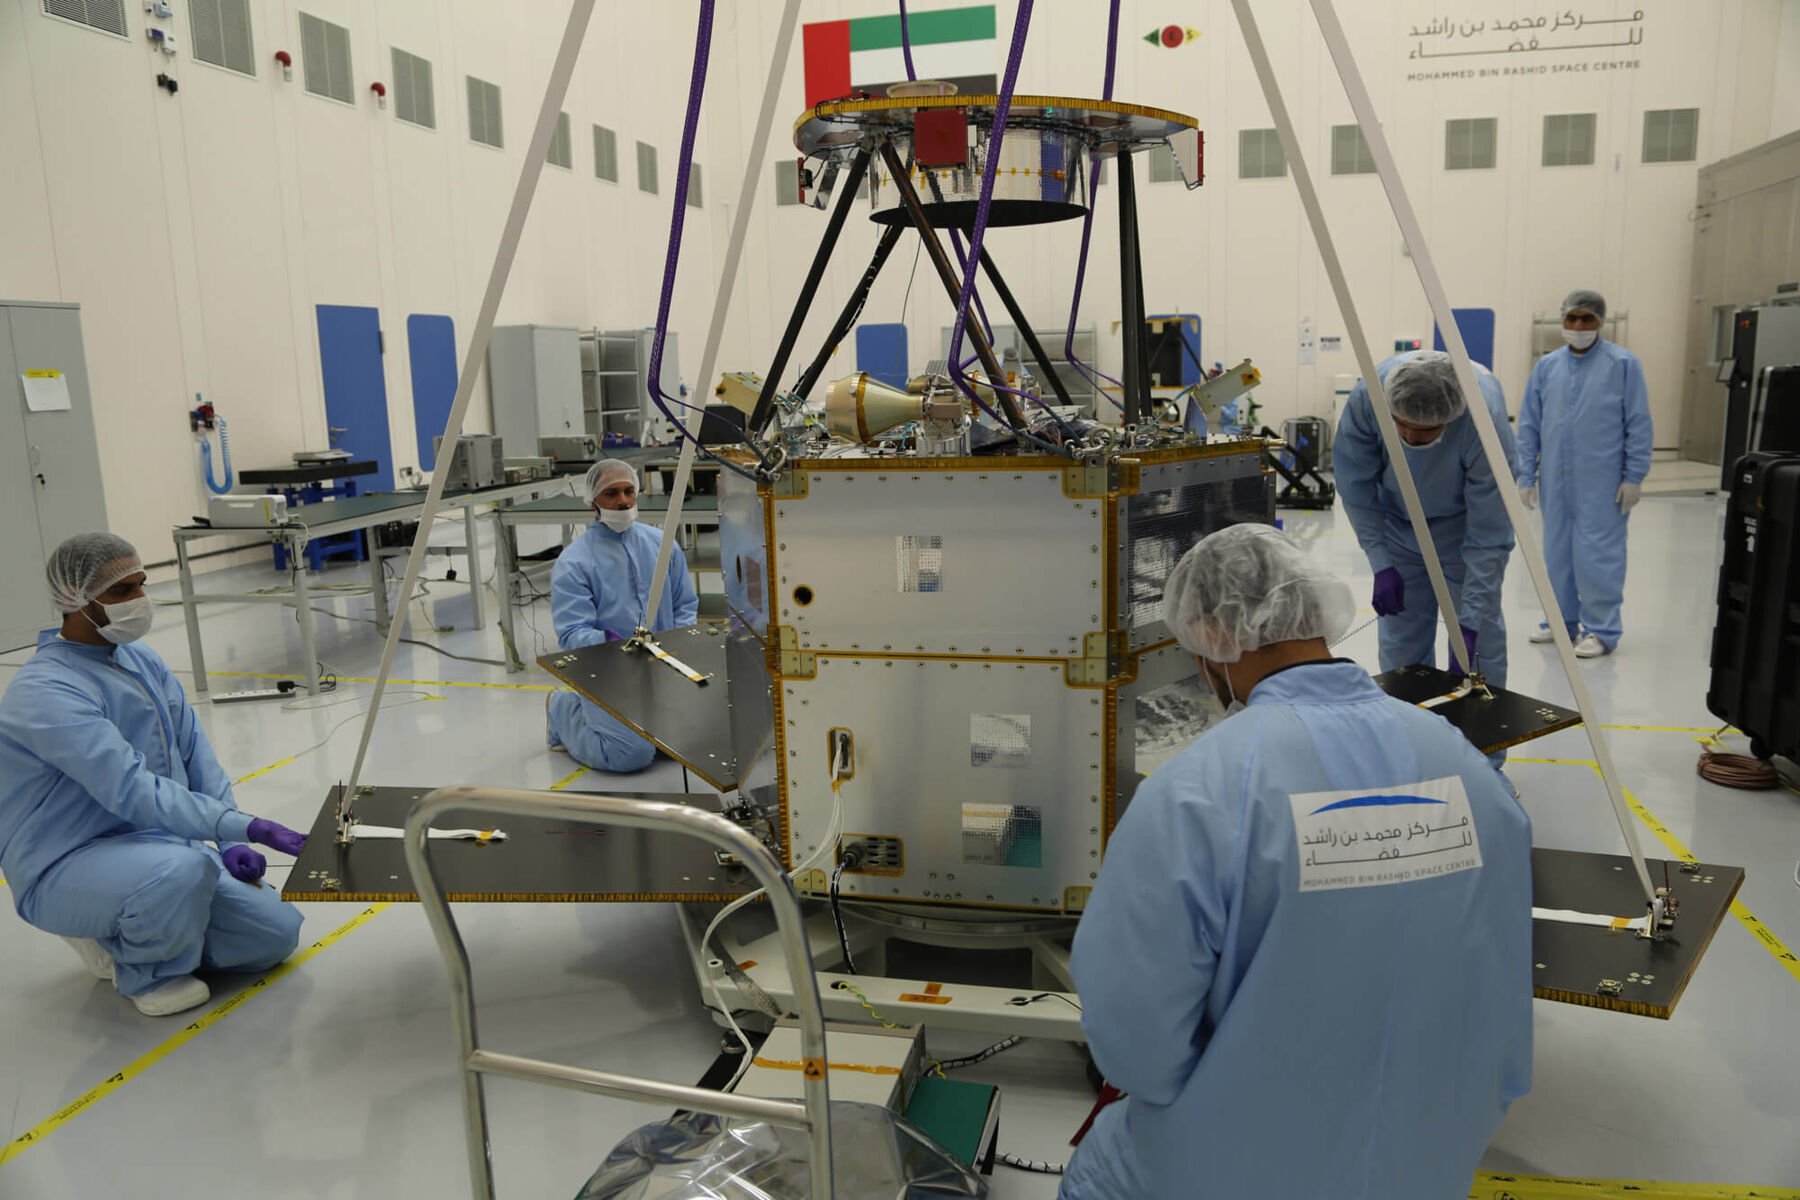 Working on a satellite in Dubai